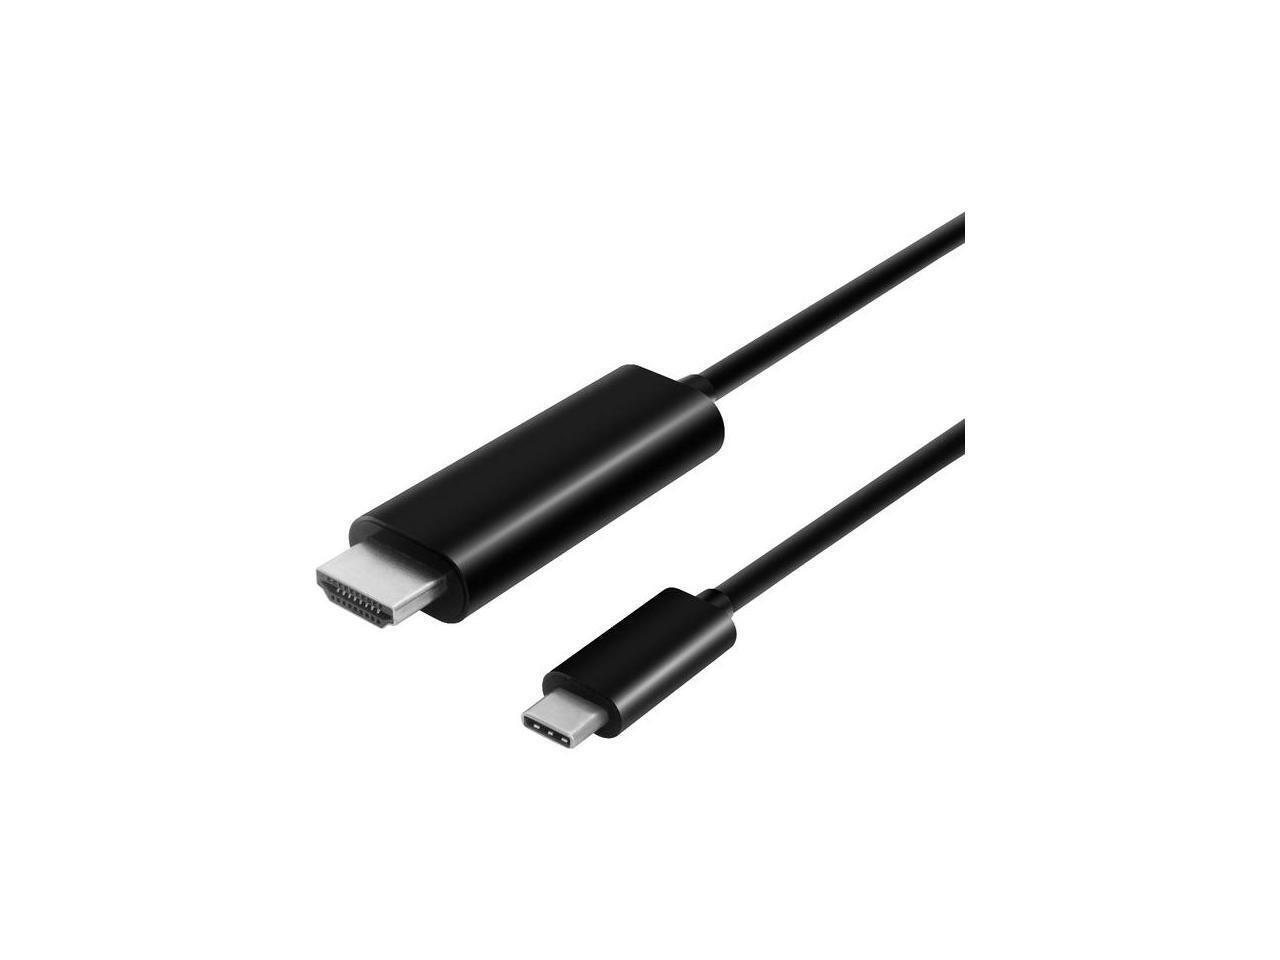 VisionTek 901219 6 Feet USB C/Thunderbolt 3 to HDMI 2.0 Cable - Black